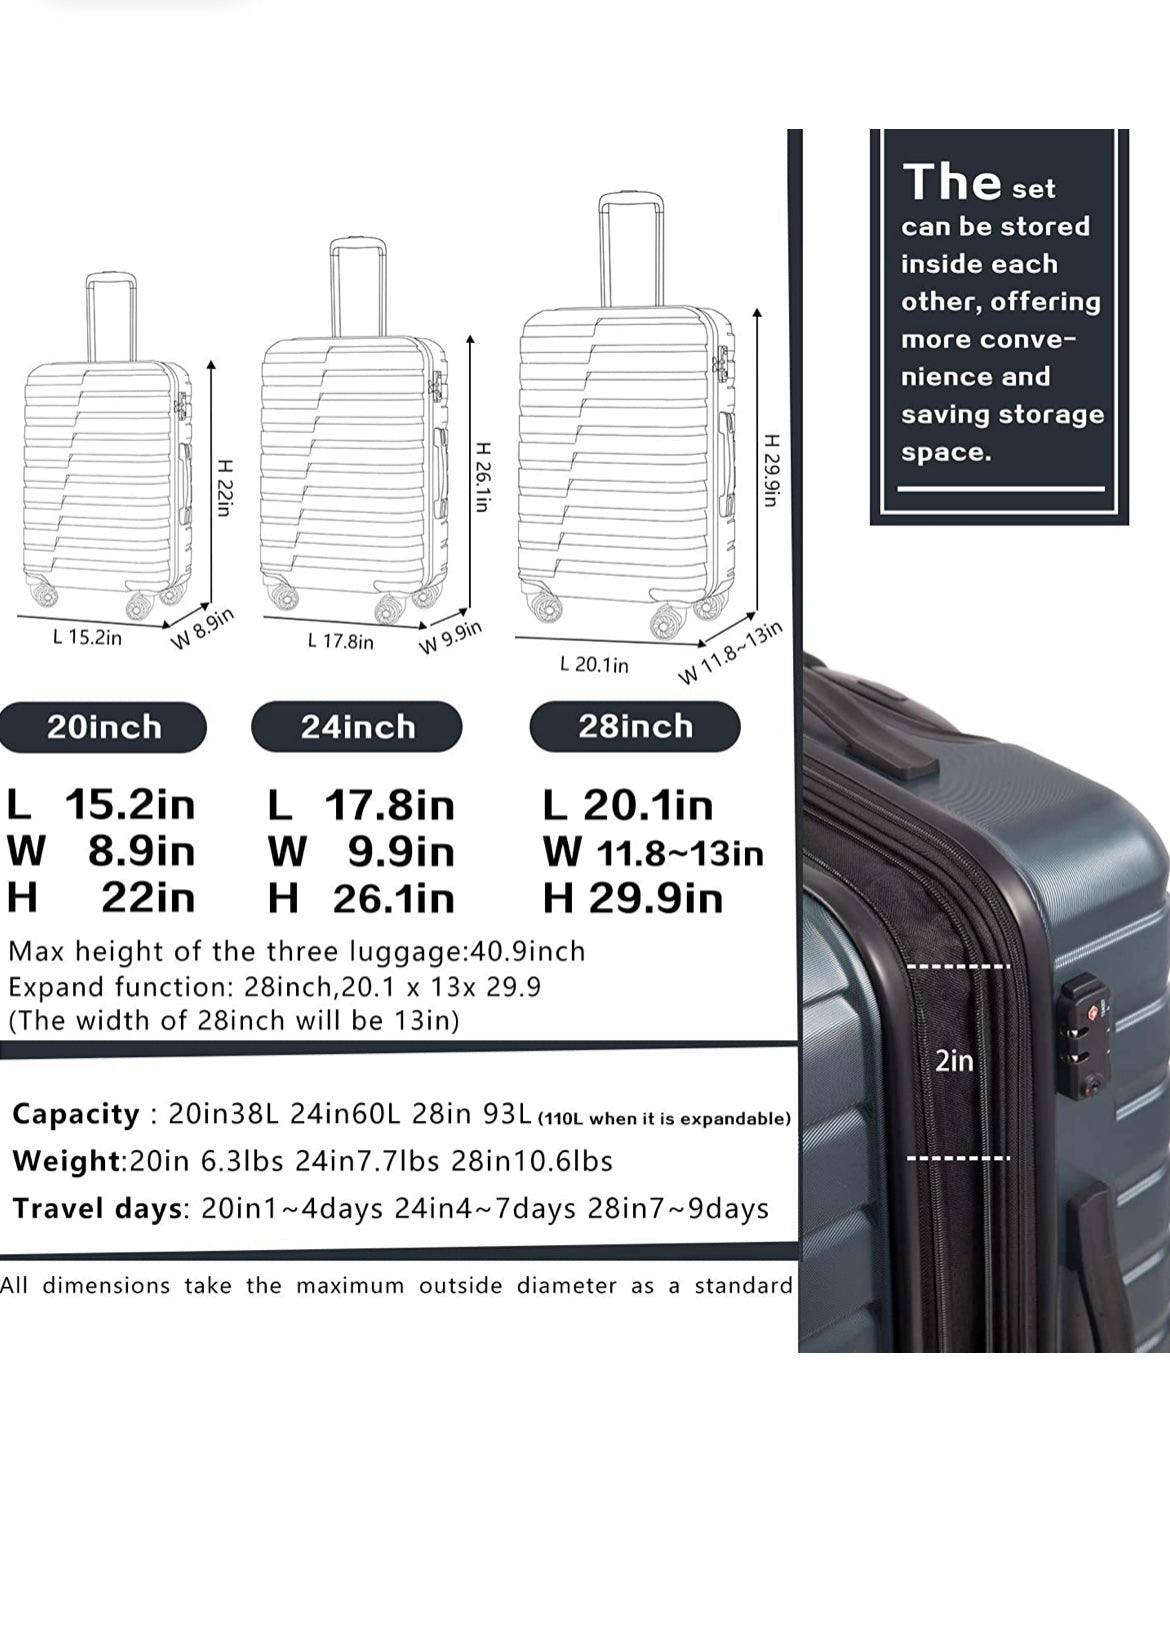 Magenta 3 Pcs Luggage Travel Set ABS Trolley